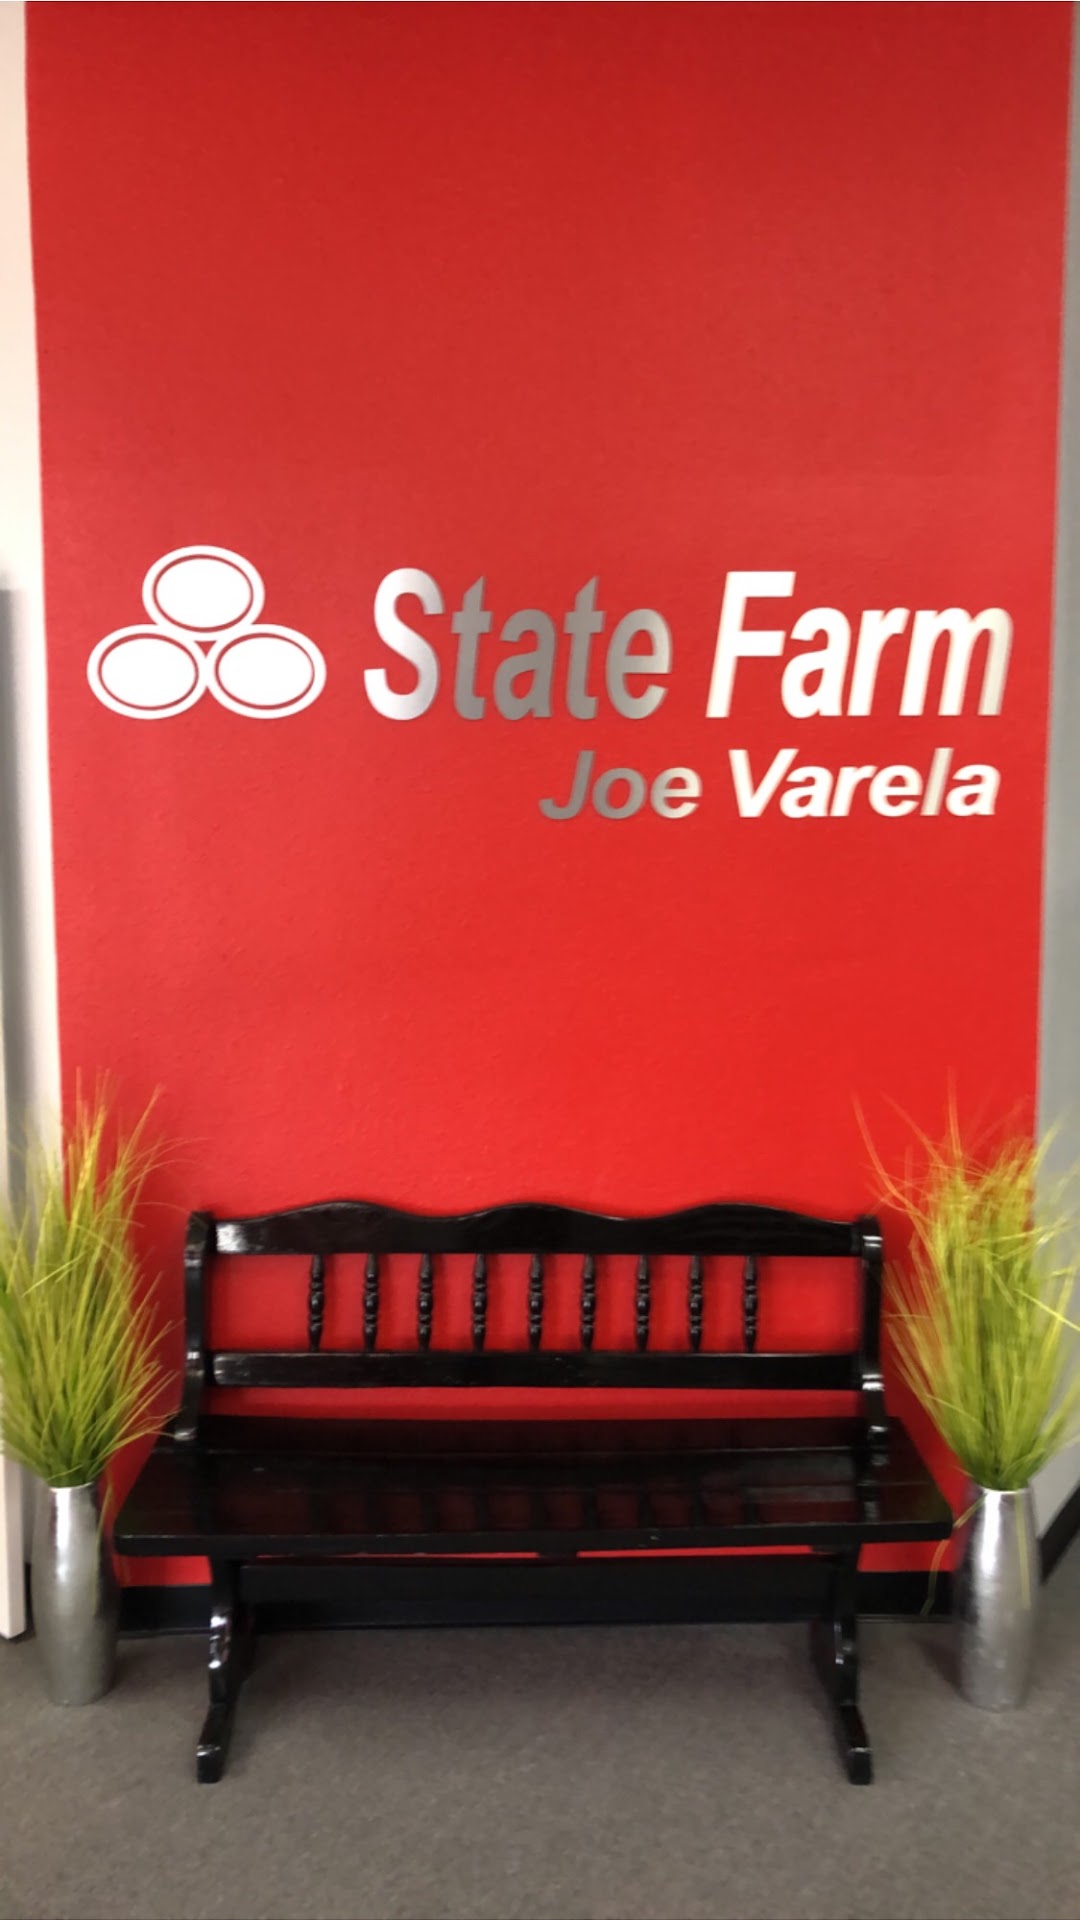 Joe Varela - State Farm Insurance Agent